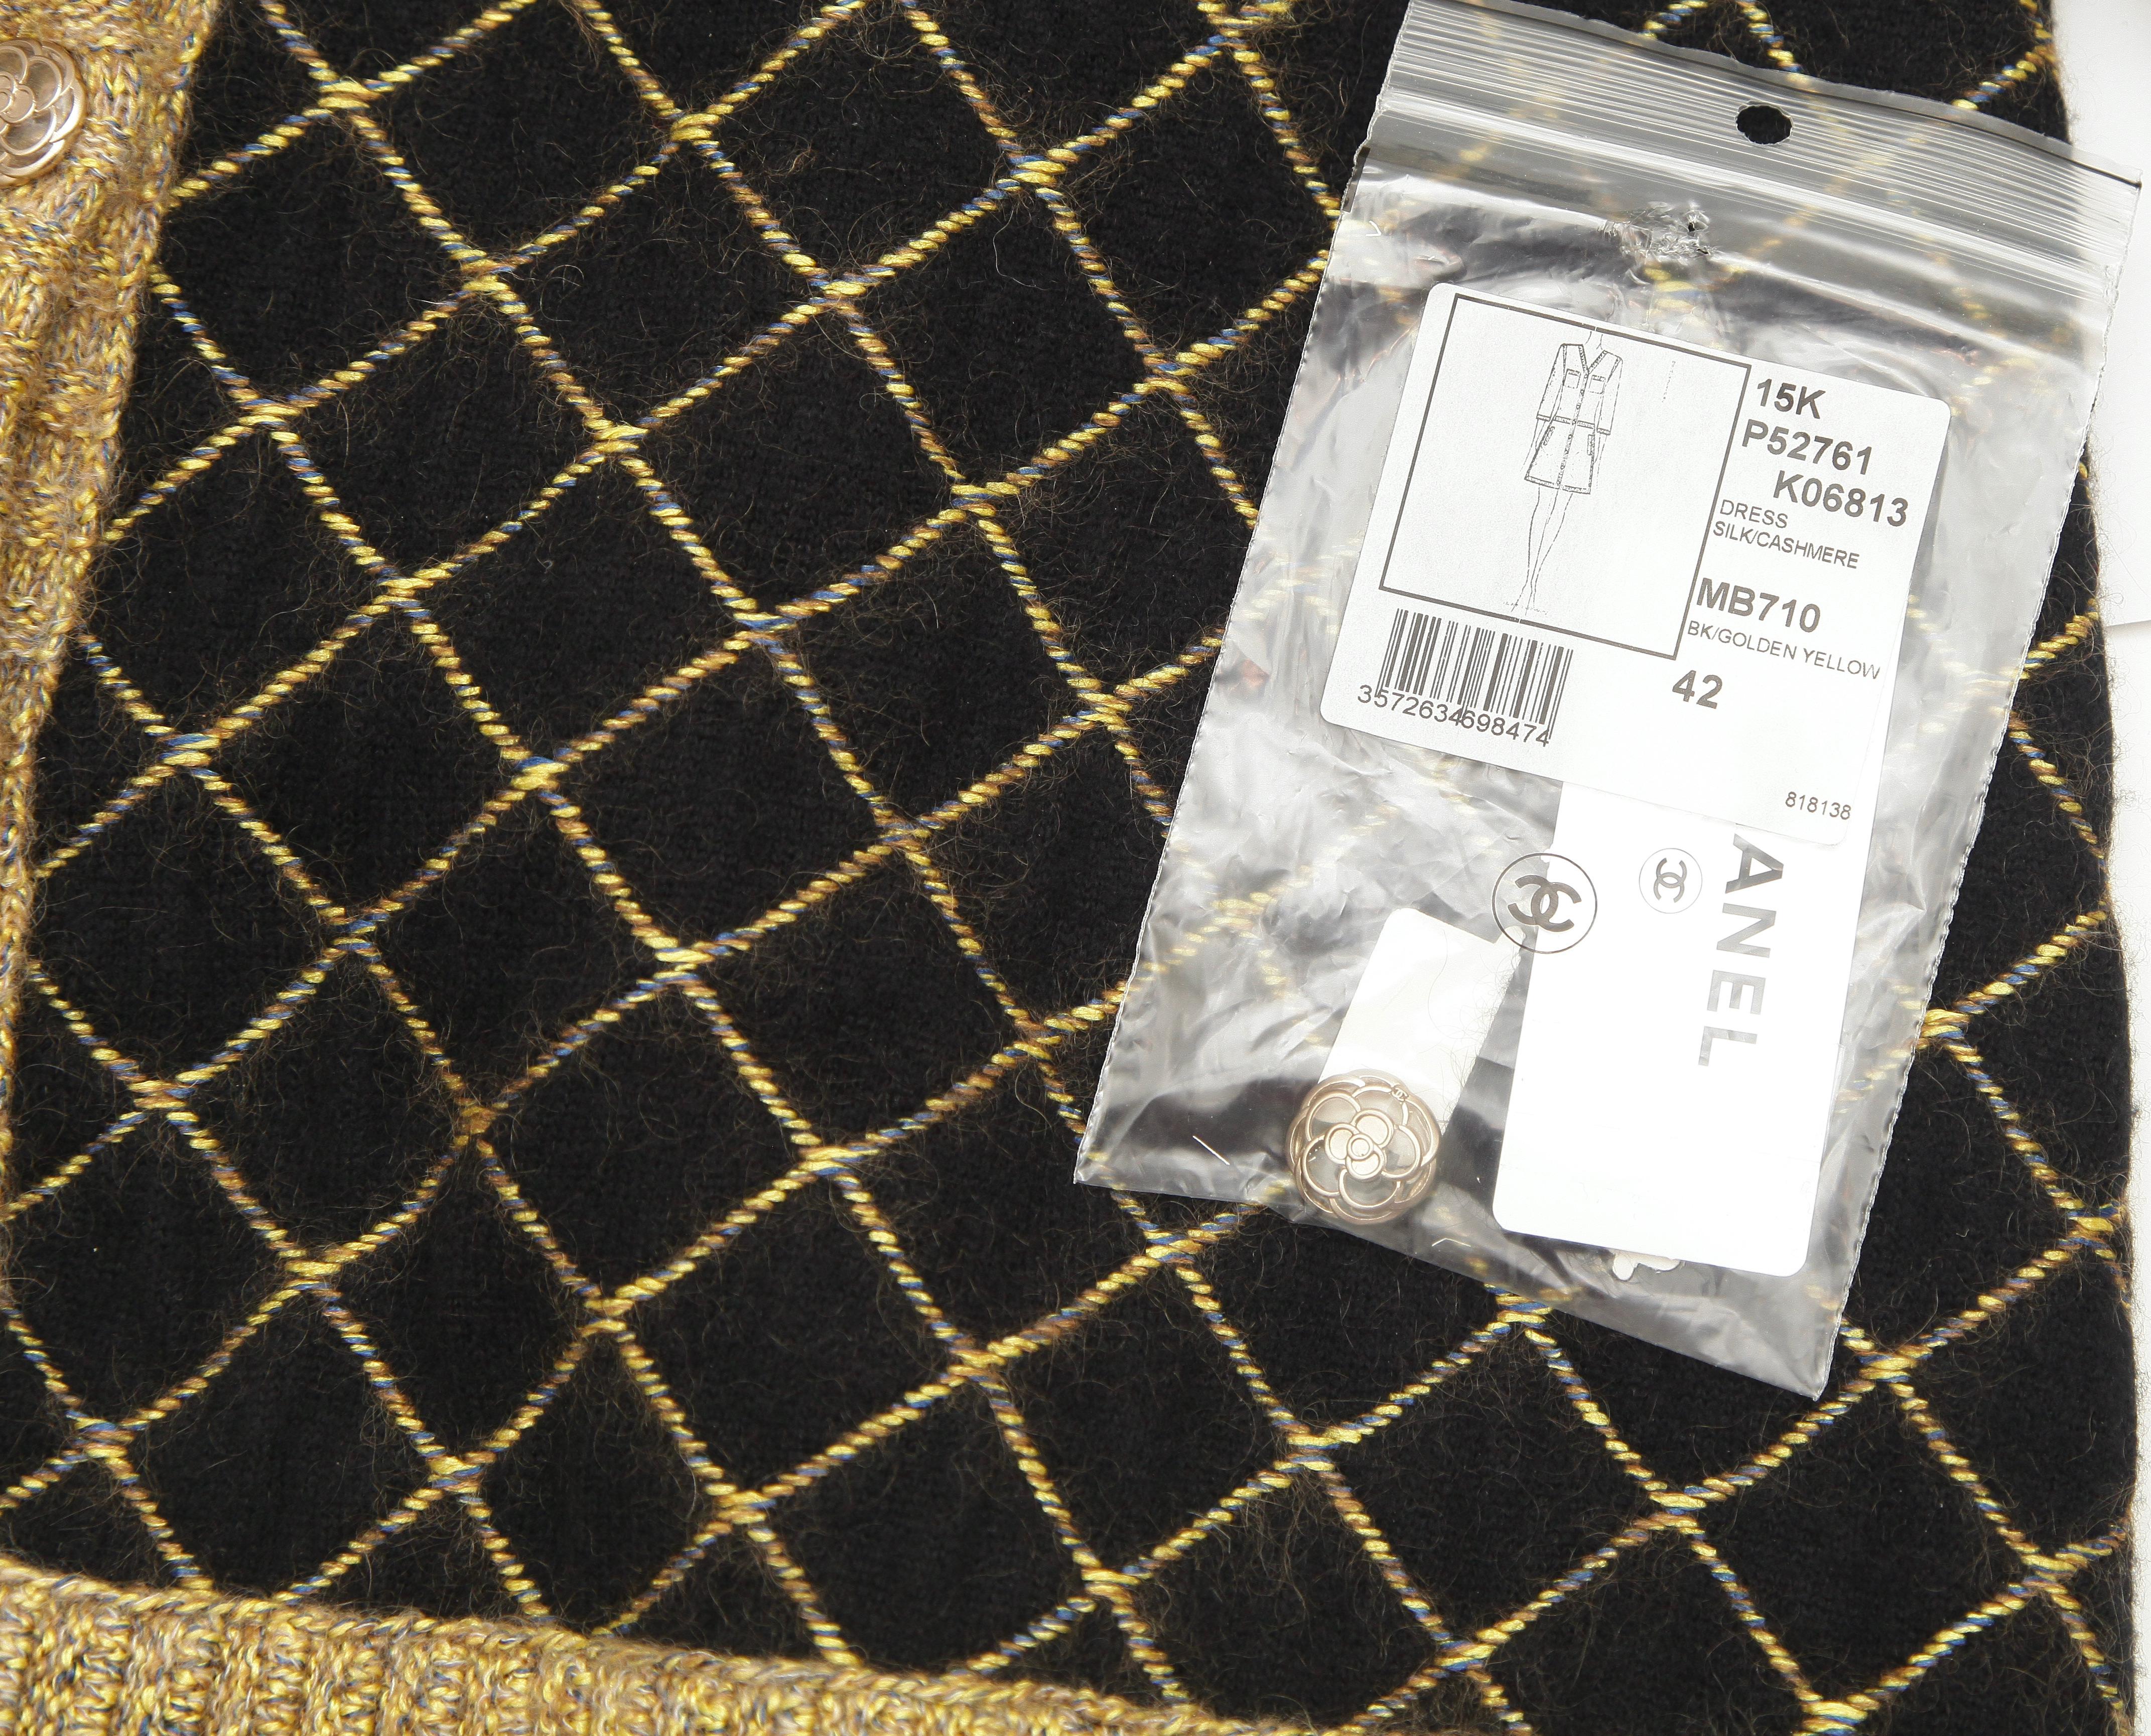 CHANEL Dress Knit Sweater Black Gold Camellia Long Sleeve Cashmere Sz 42 2015 7